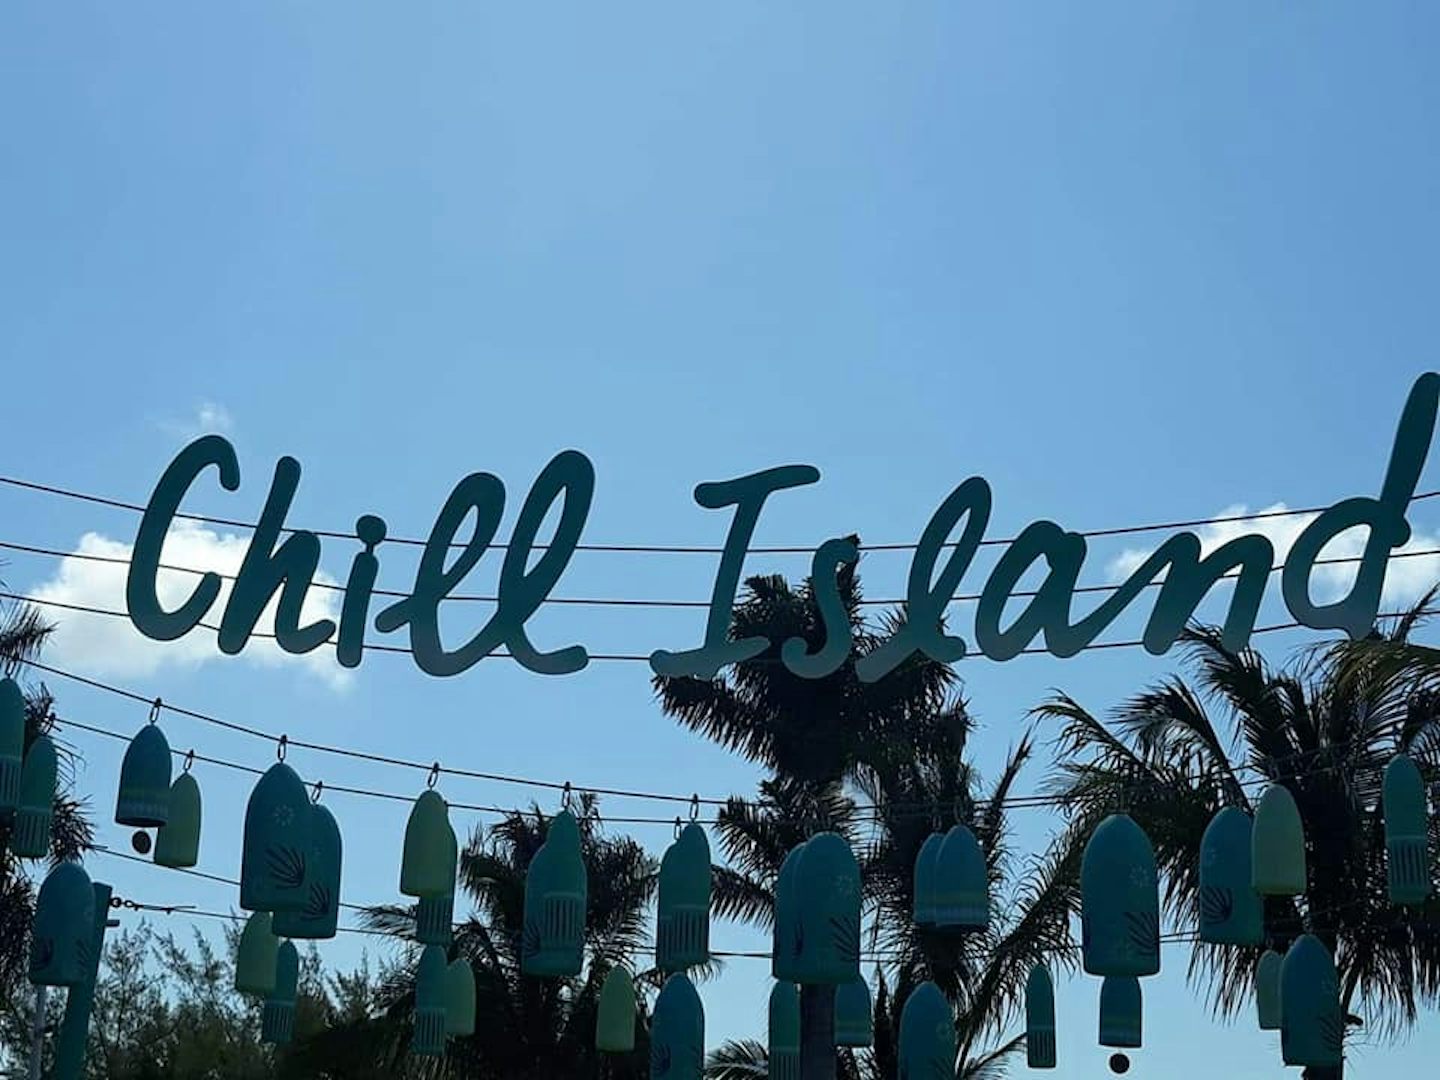 Chill Island sign